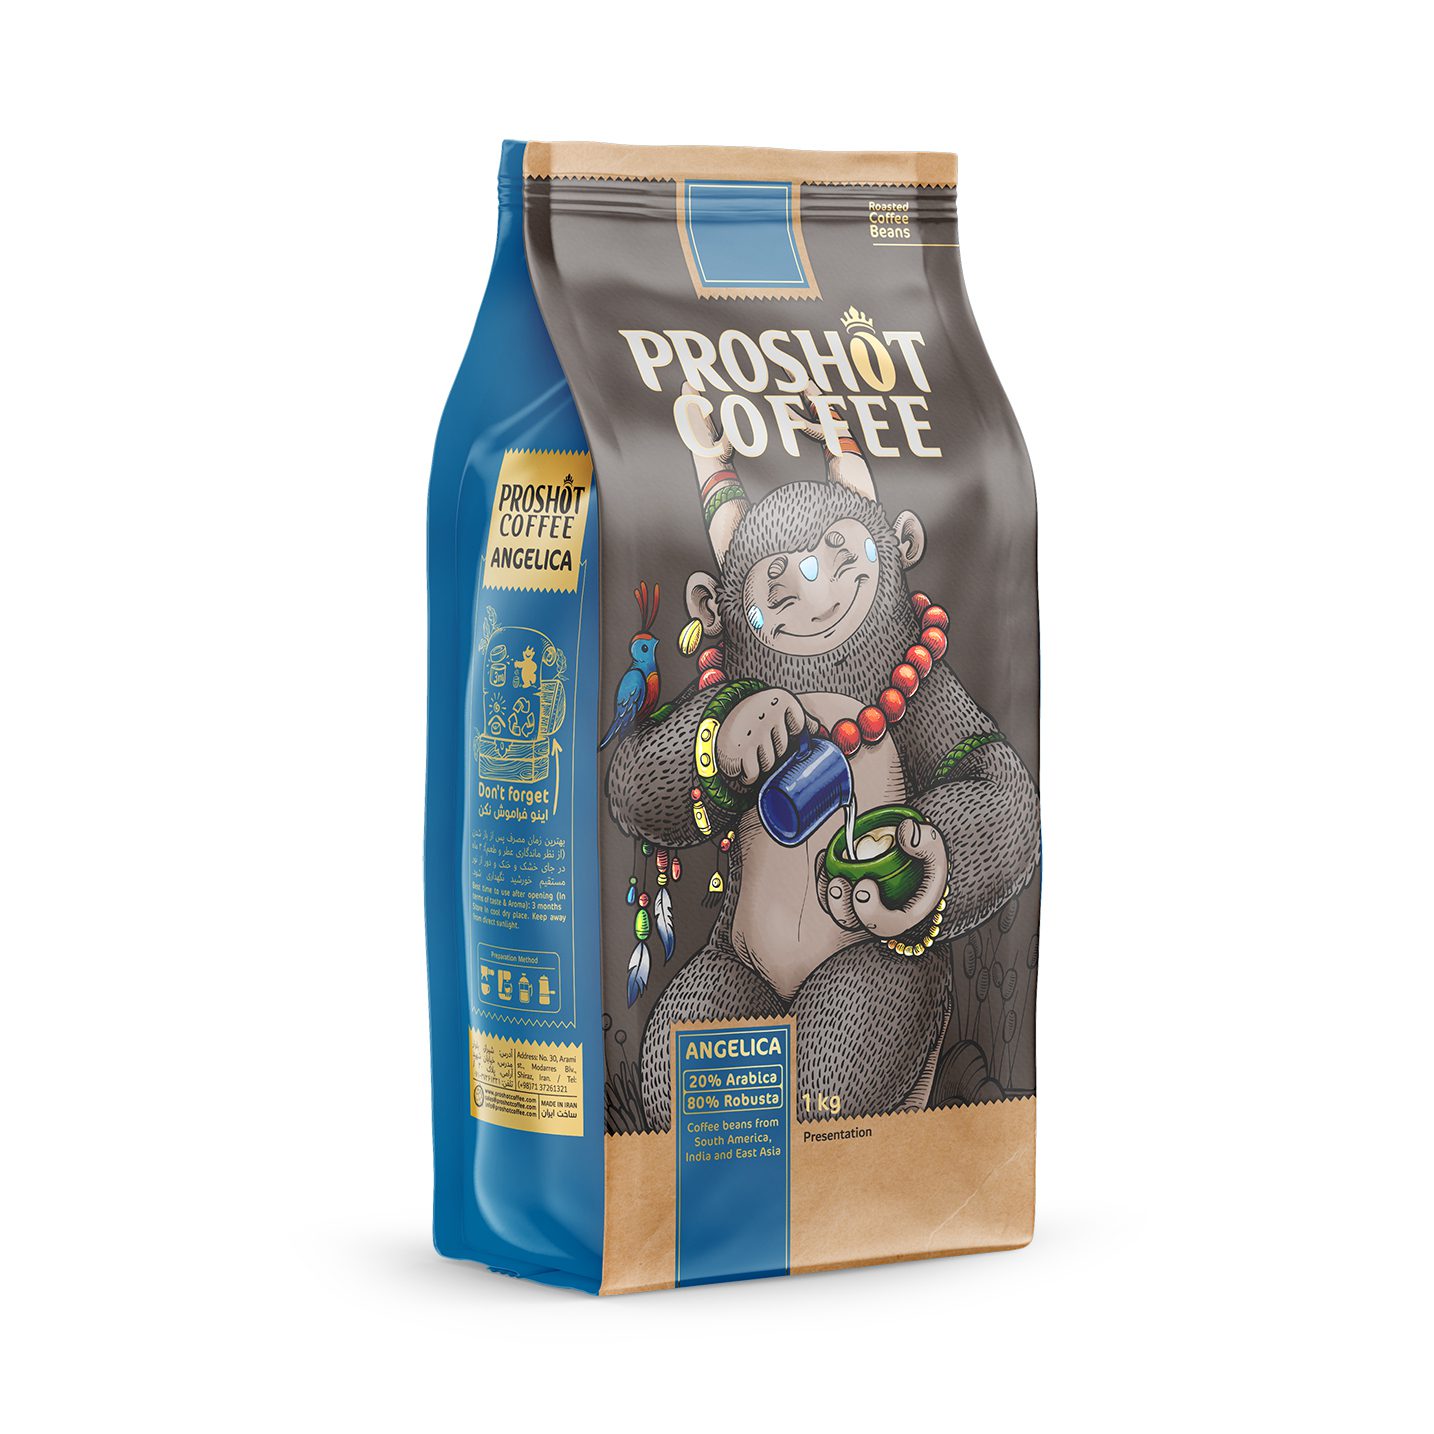 قهوه 80% ربوستا پروشات آنجلیکا 1 کیلویی